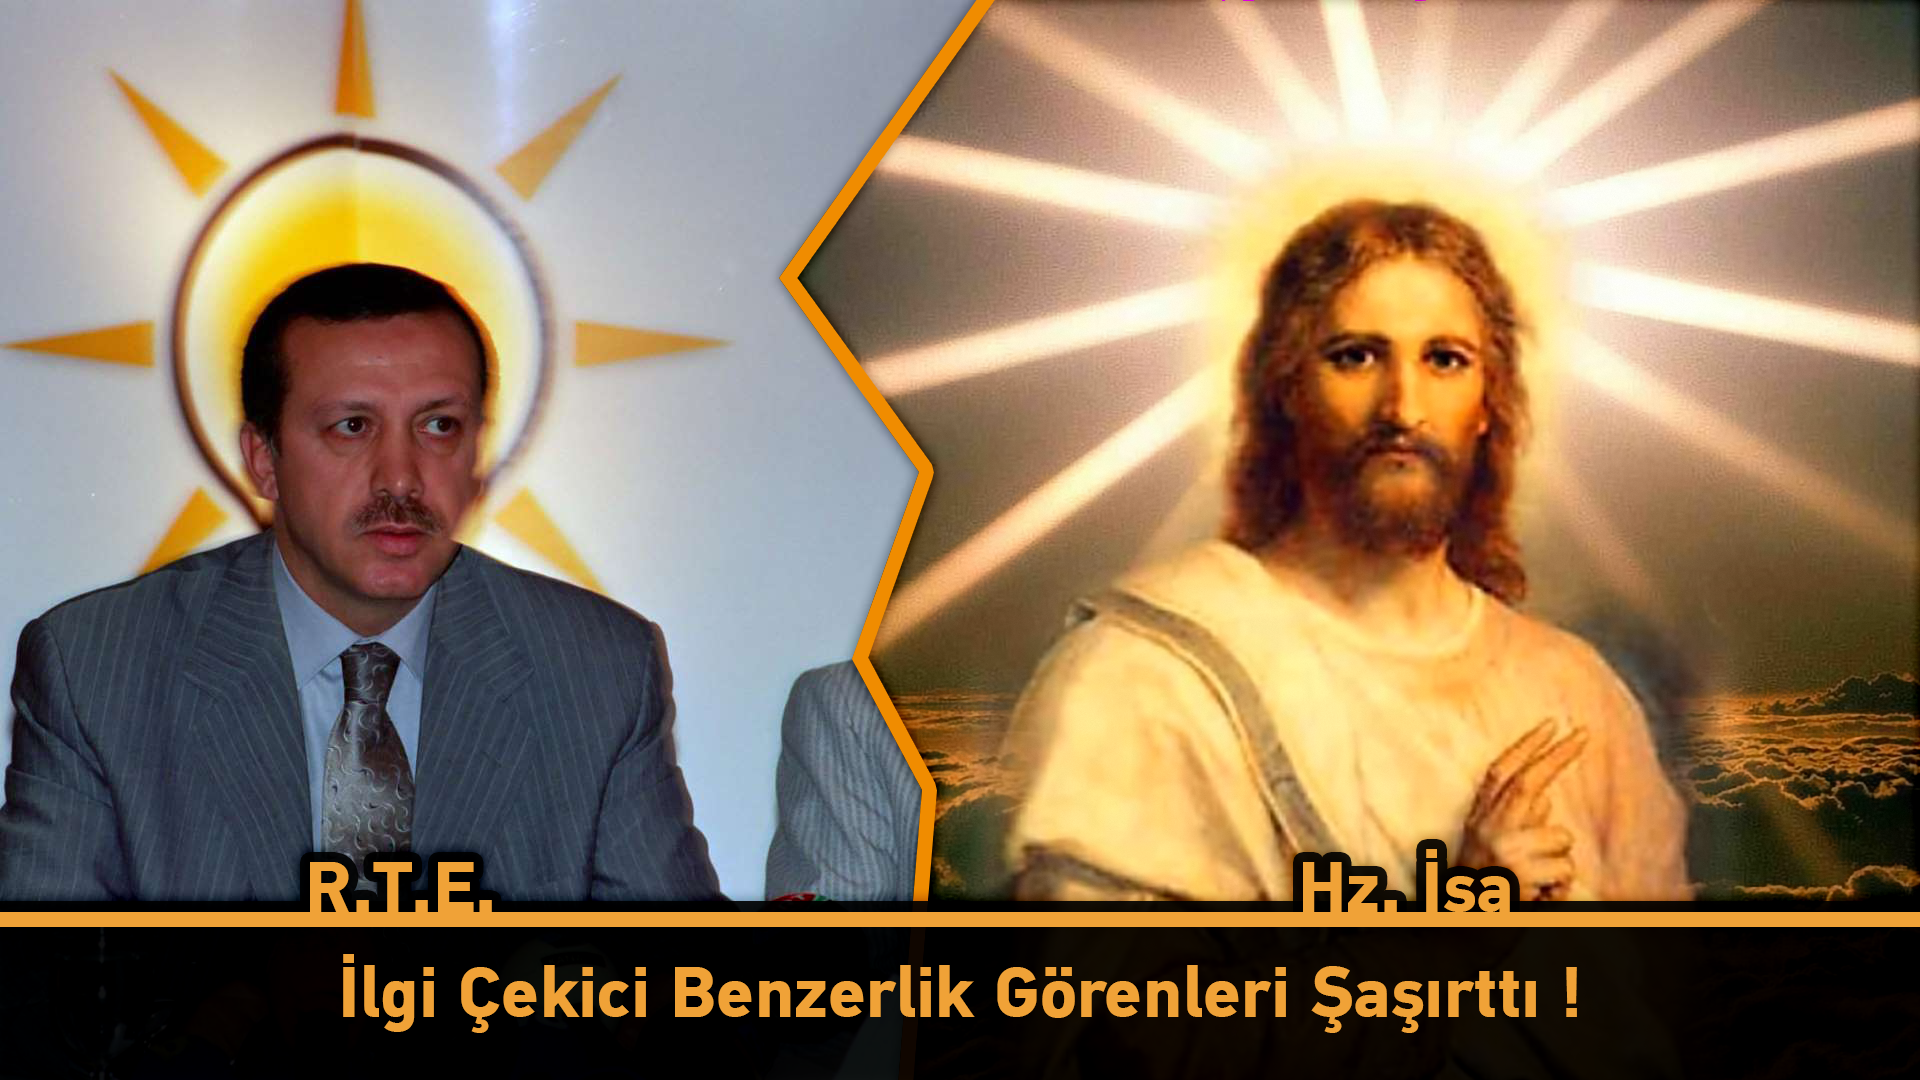 Recep Tayyip Erdogan And Jesus - Recep Tayyip Erdoğan Jesus , HD Wallpaper & Backgrounds